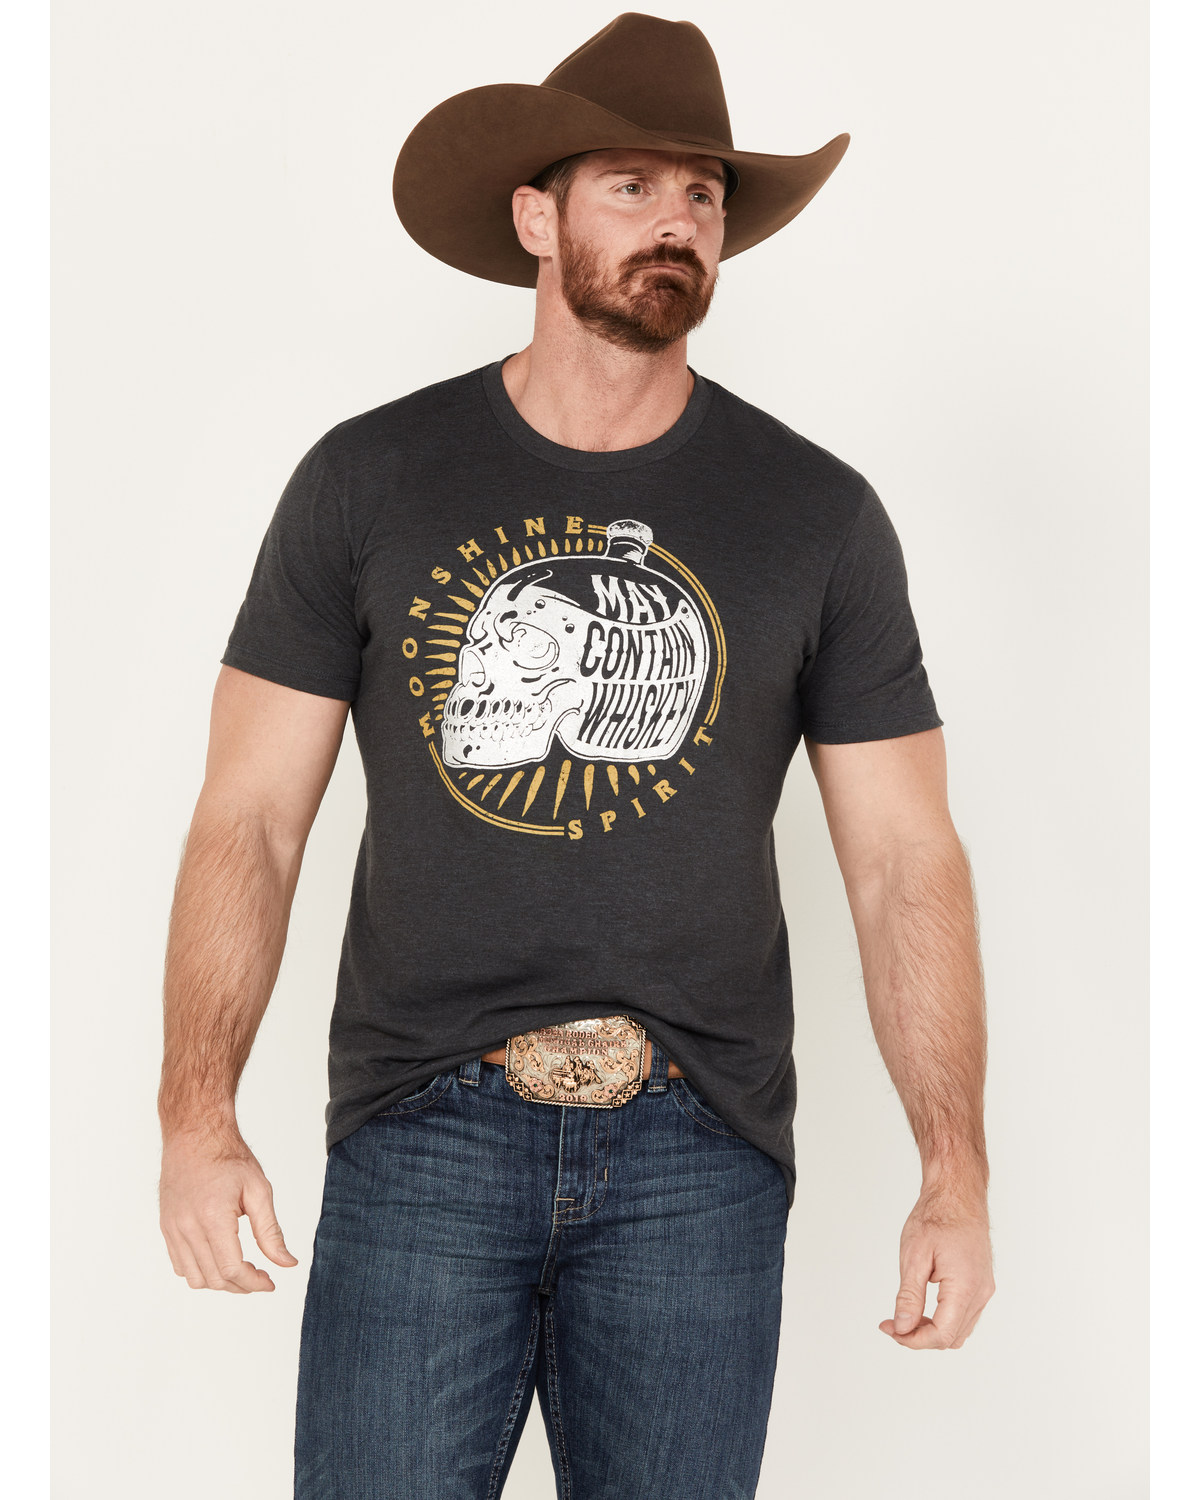 Moonshine Spirit Men's May Contain Whiskey Short Sleeve Graphic T-Shirt